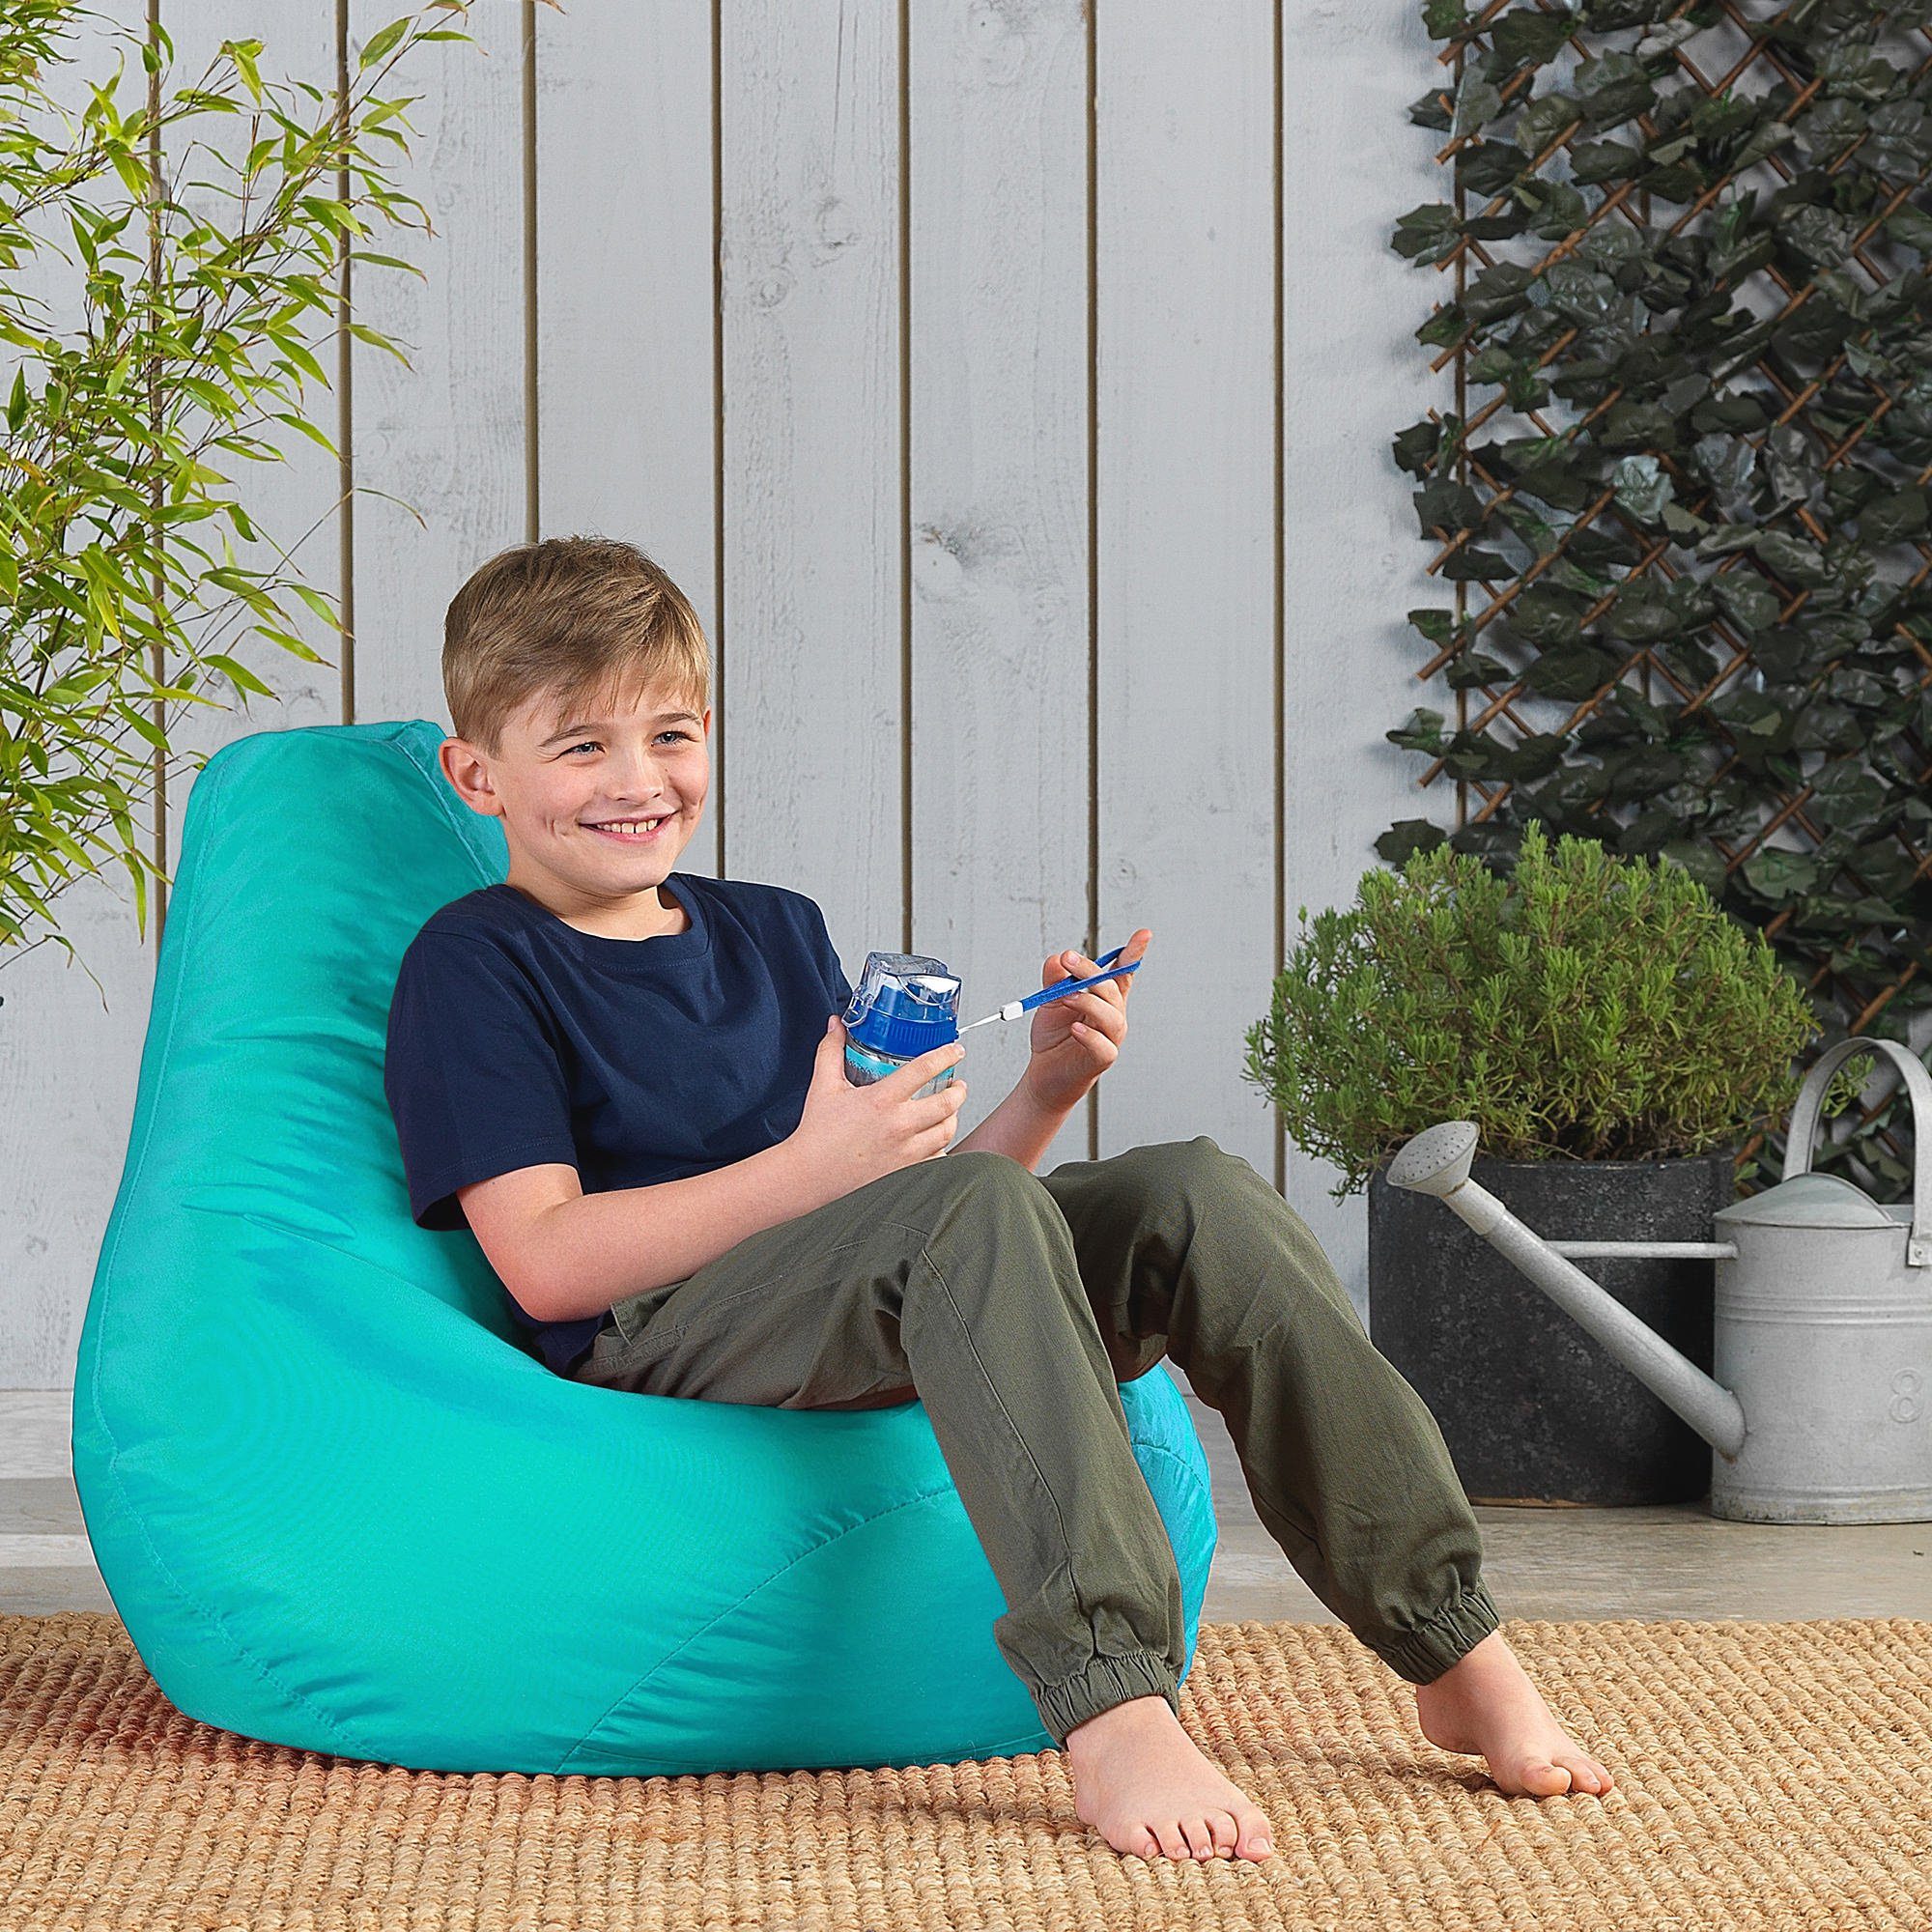 Veeva Sitzsack aquablau Outdoor Sitzsack-Sessel für Kinder